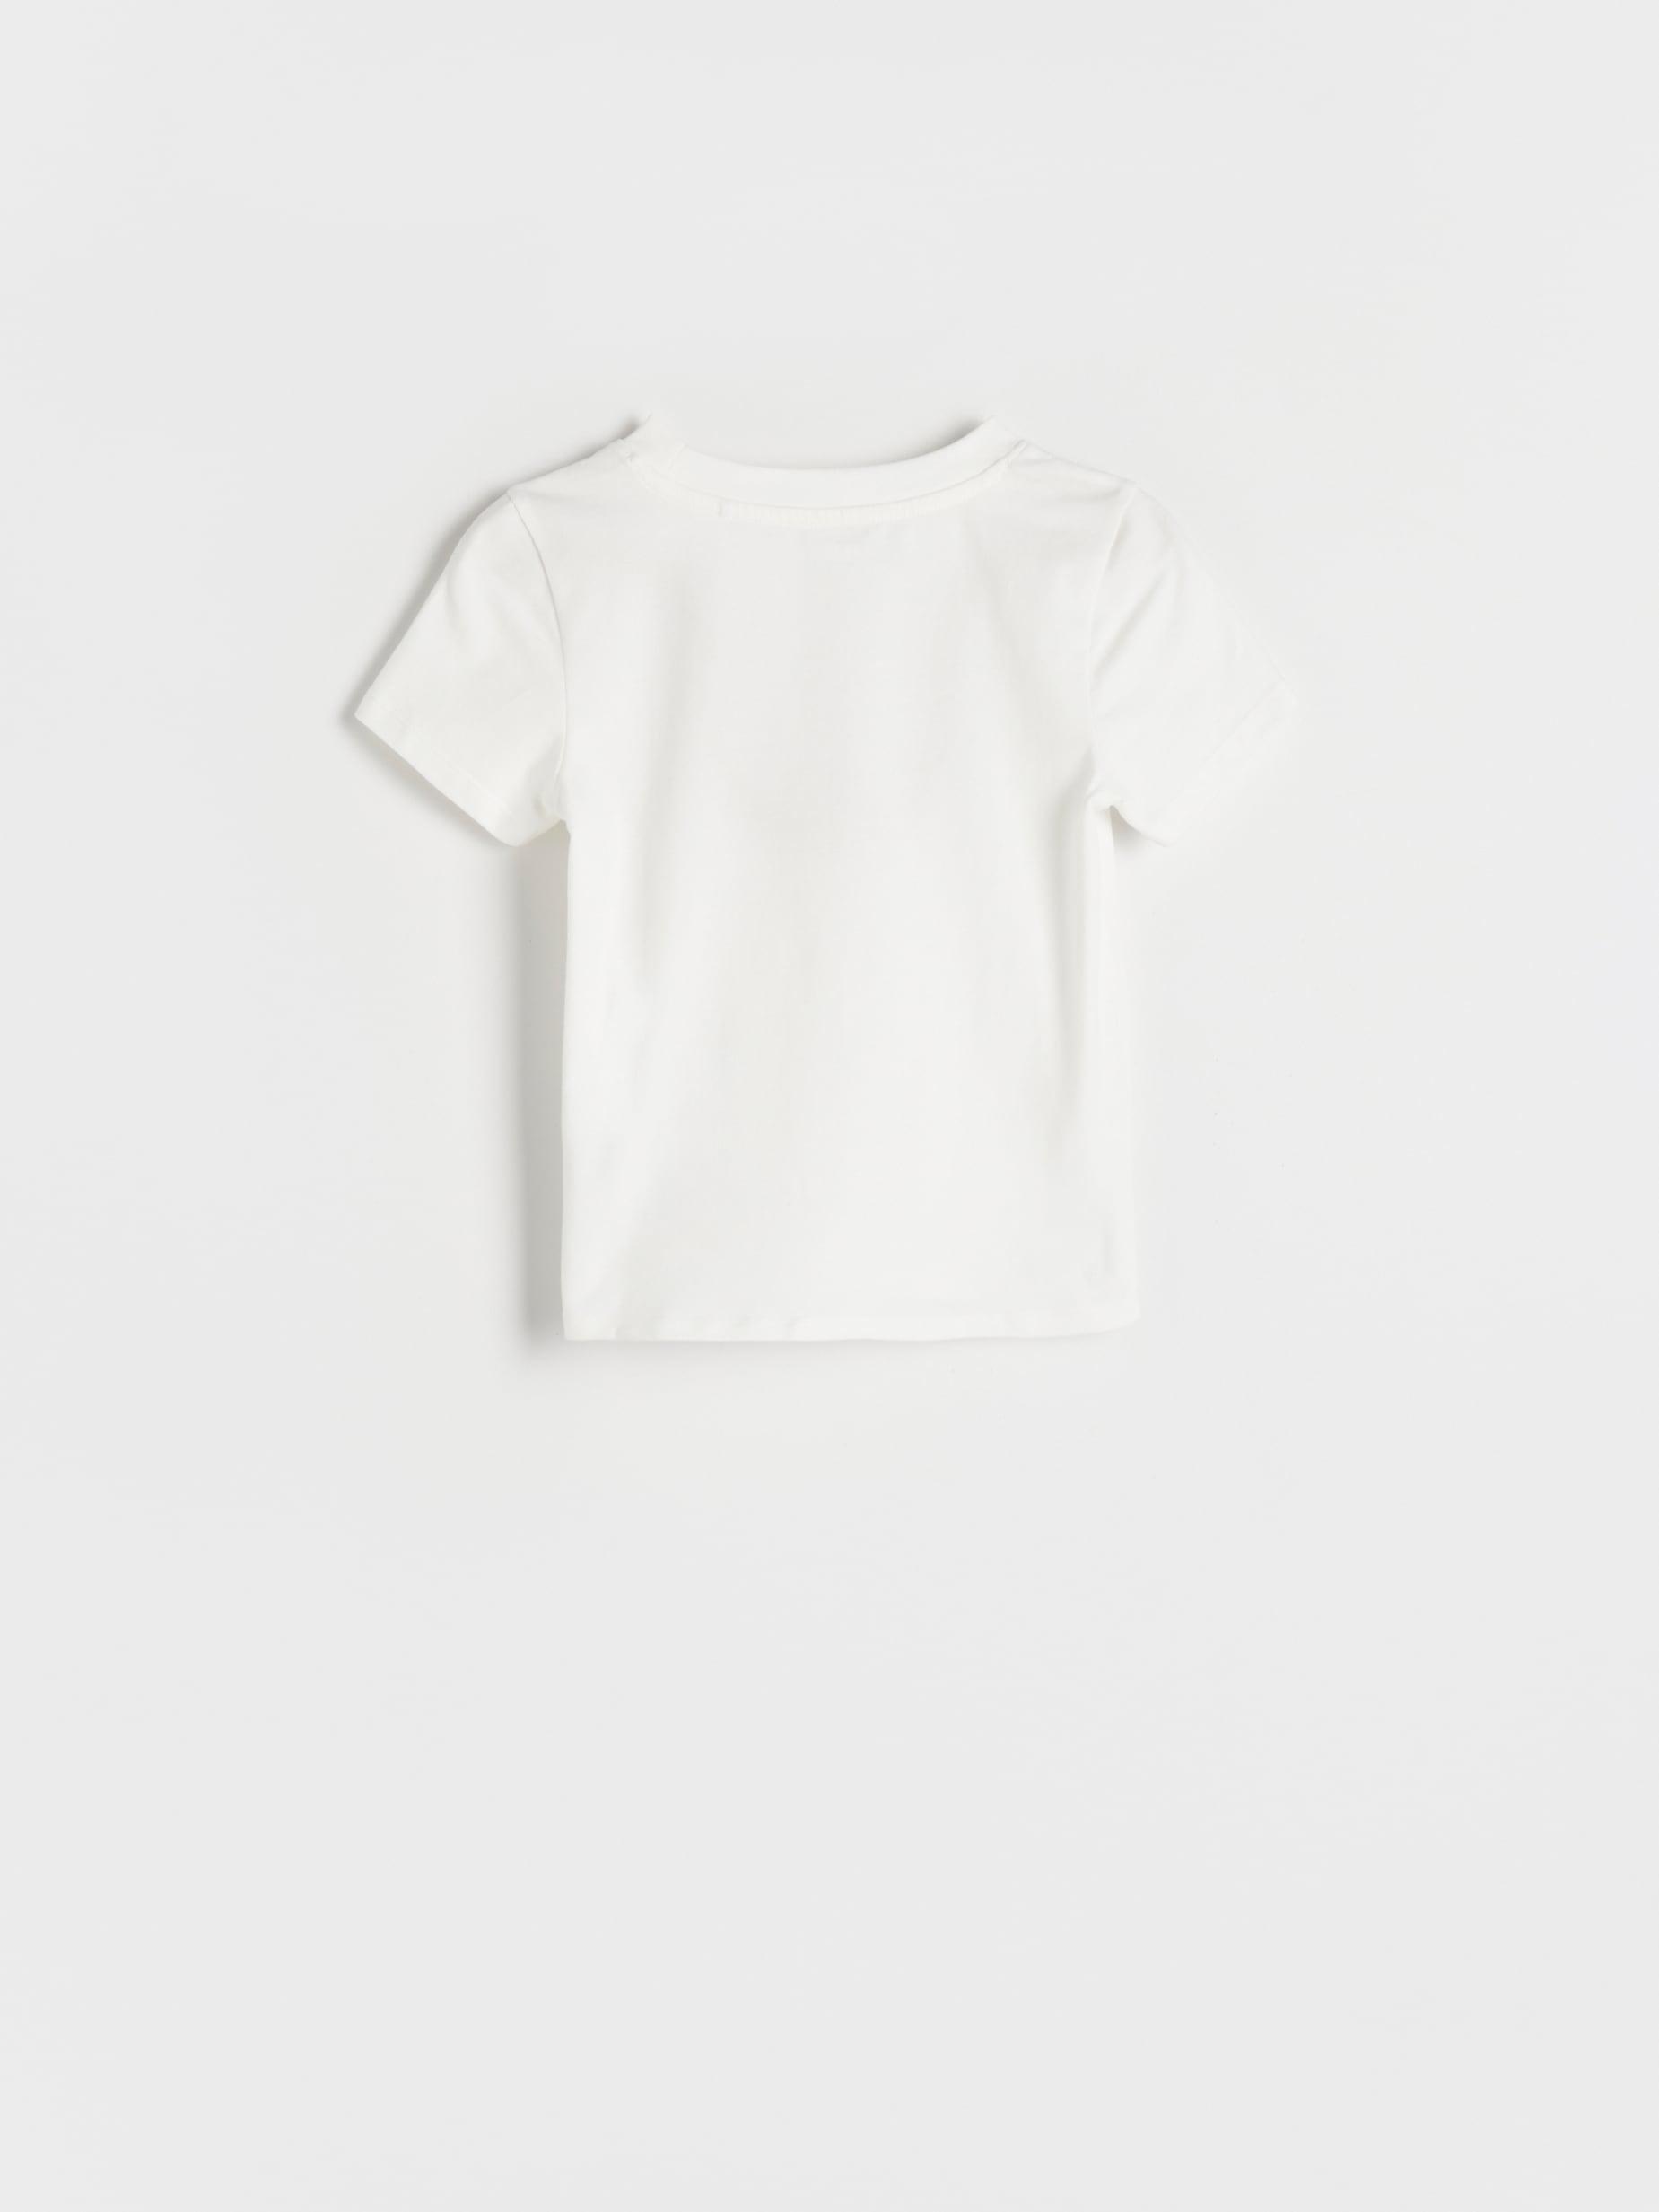 Reserved - Cream Cotton Rich T-Shirt, Kids Girls